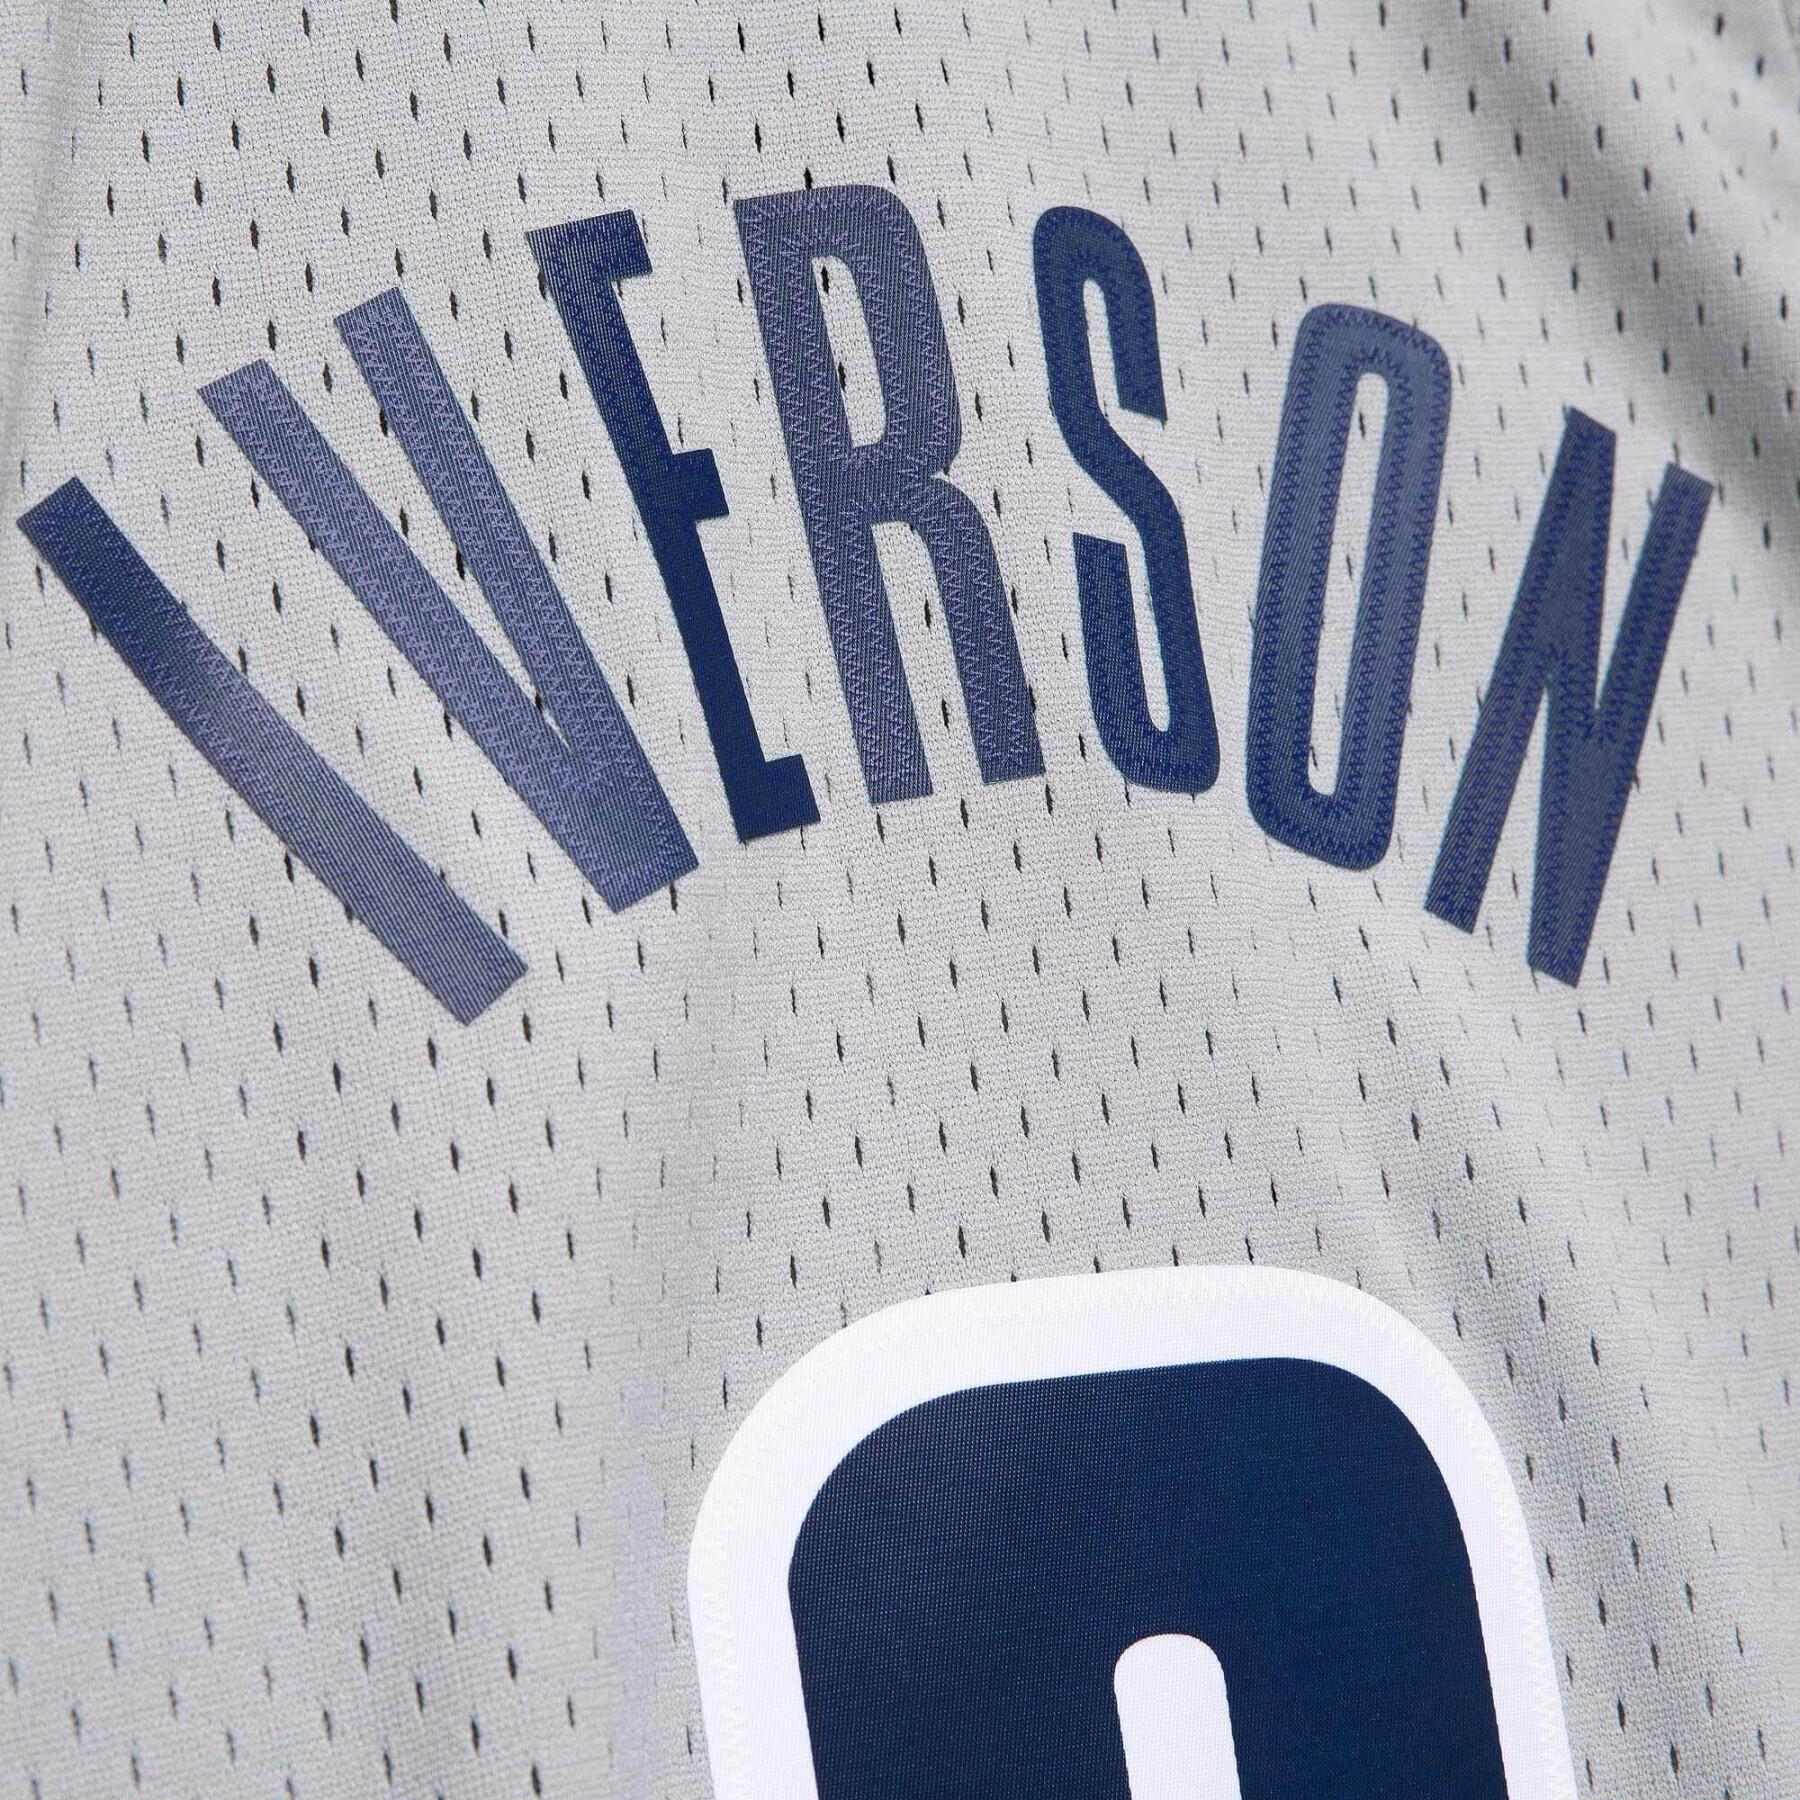 Allen iverson jersey Philadelphia 76ers 1996-97